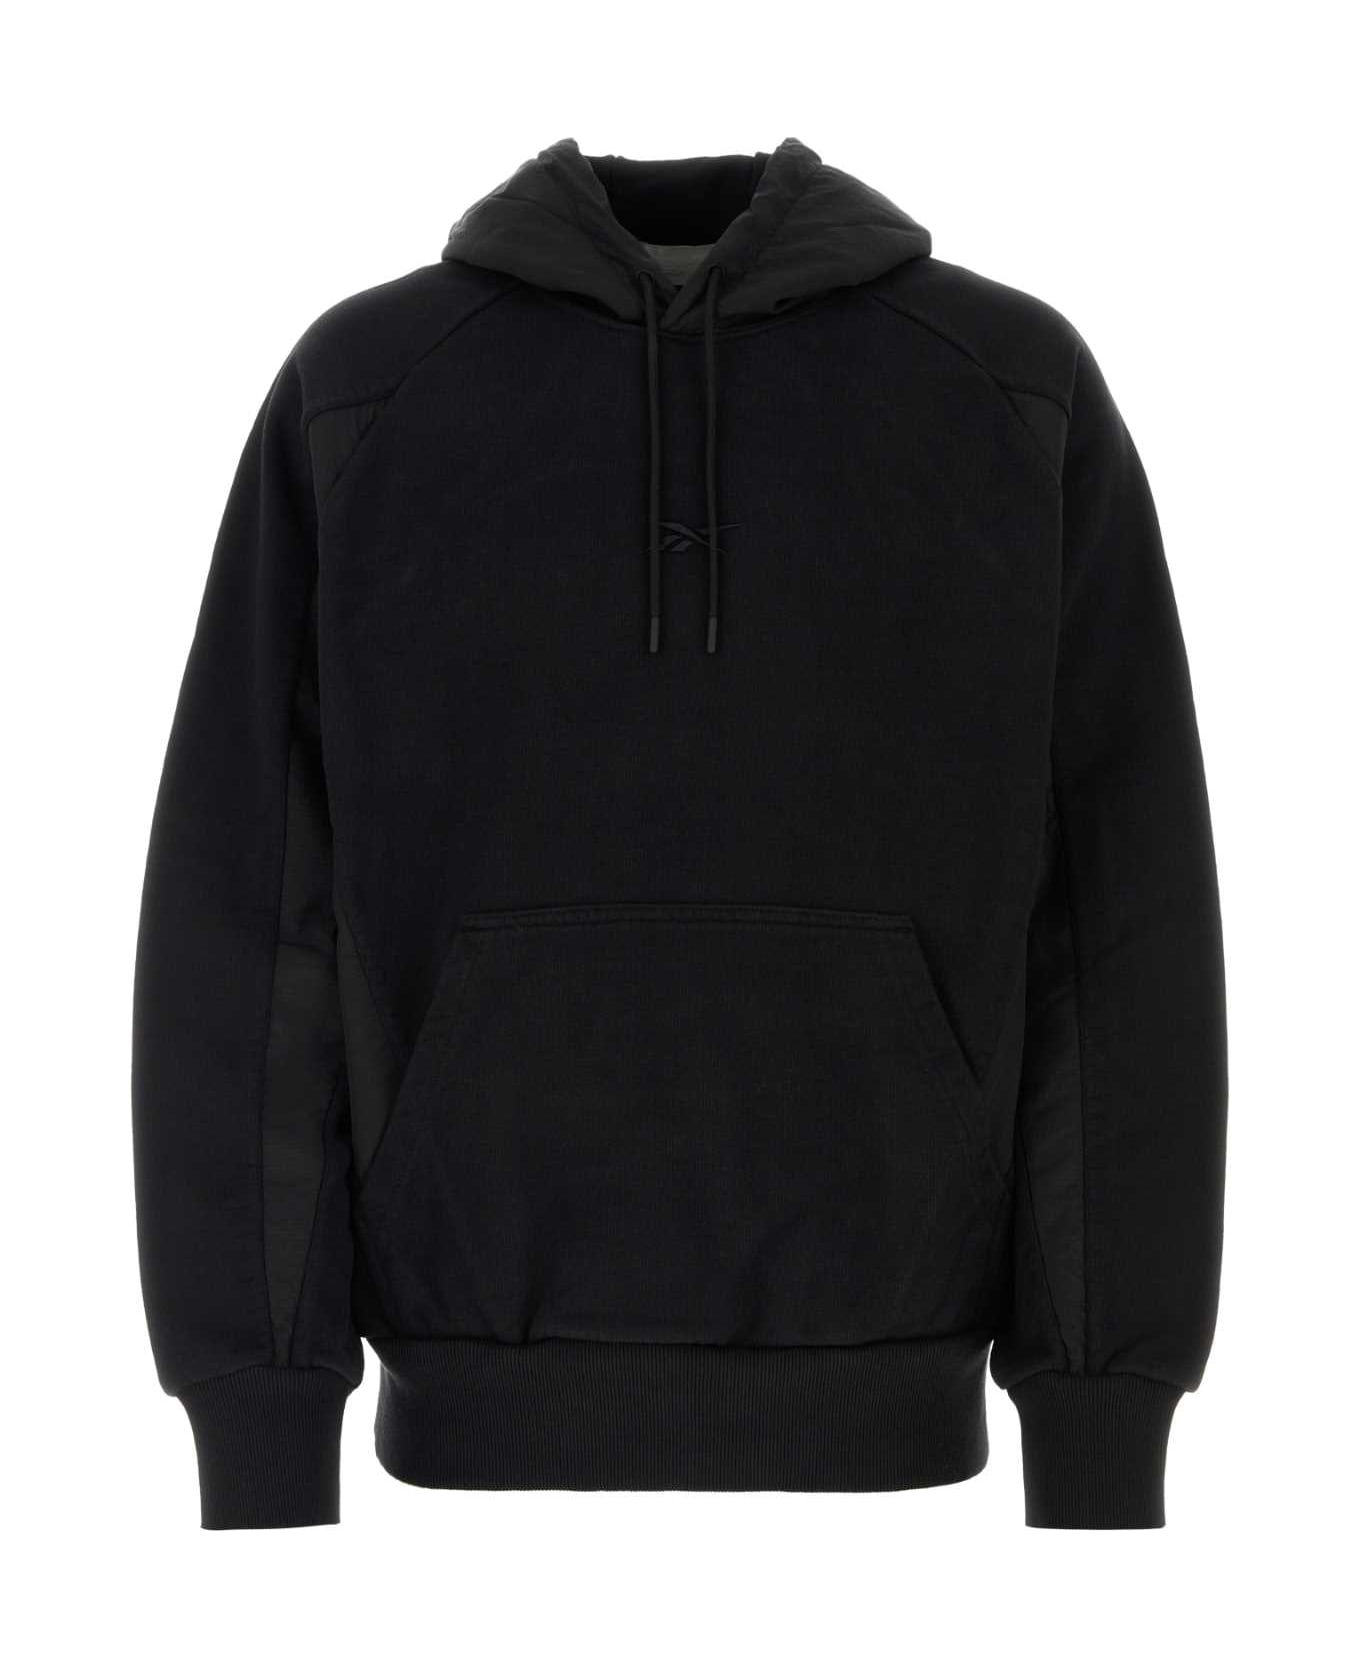 Reebok Black Cotton Sweatshirt - Black